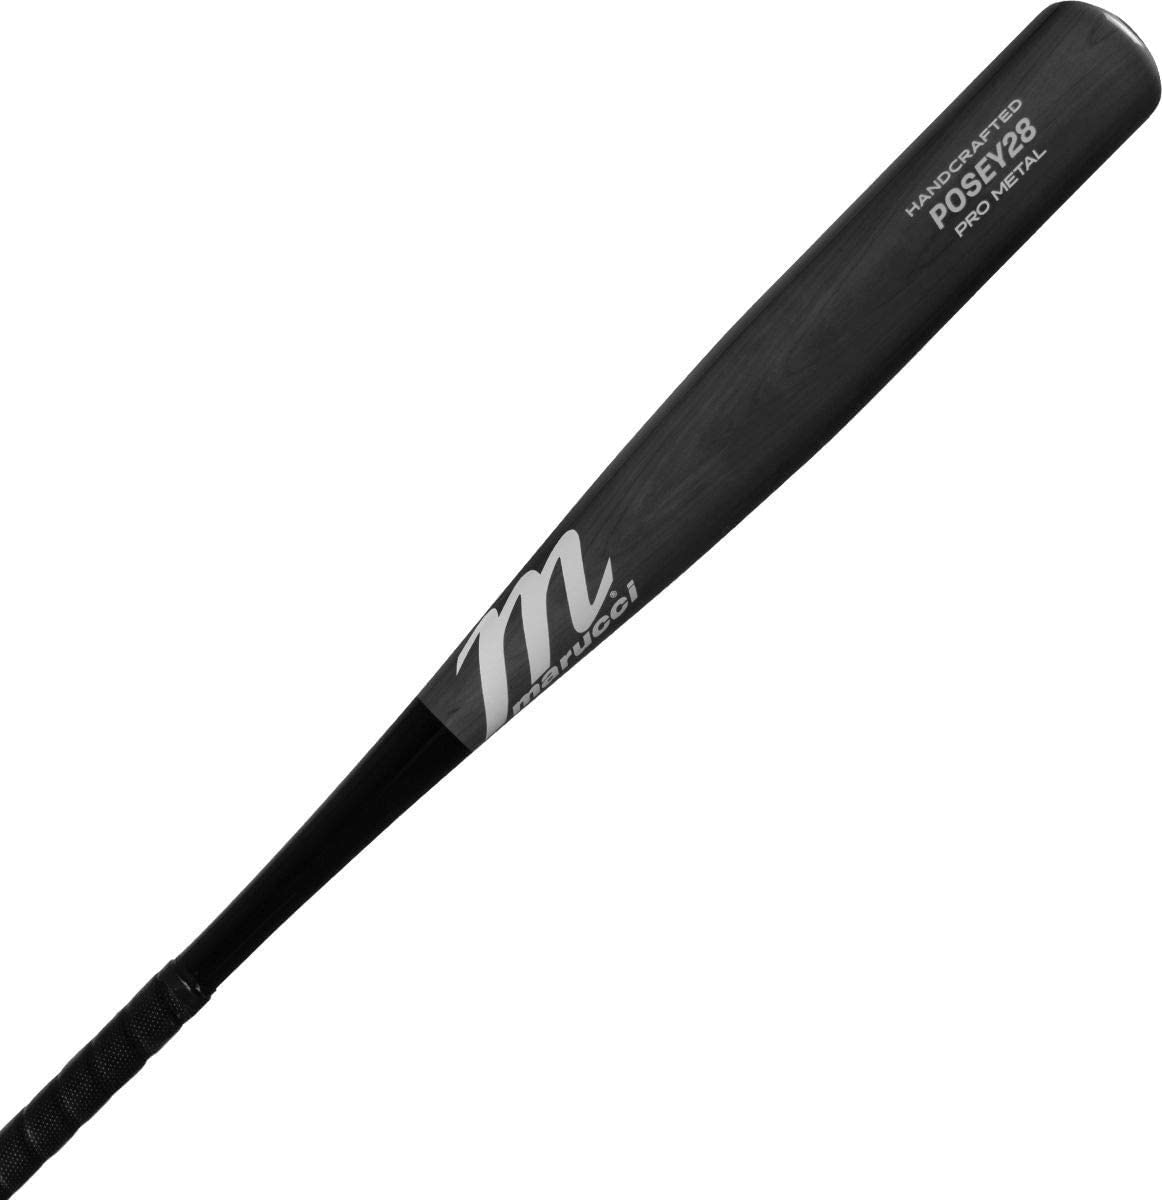 marucci-posey28-3-bbcor-baseball-bat-30-inch-27-oz MCBP28S-3027 Marucci   AZ105 alloy the strongest aluminum on the Marucci bat line